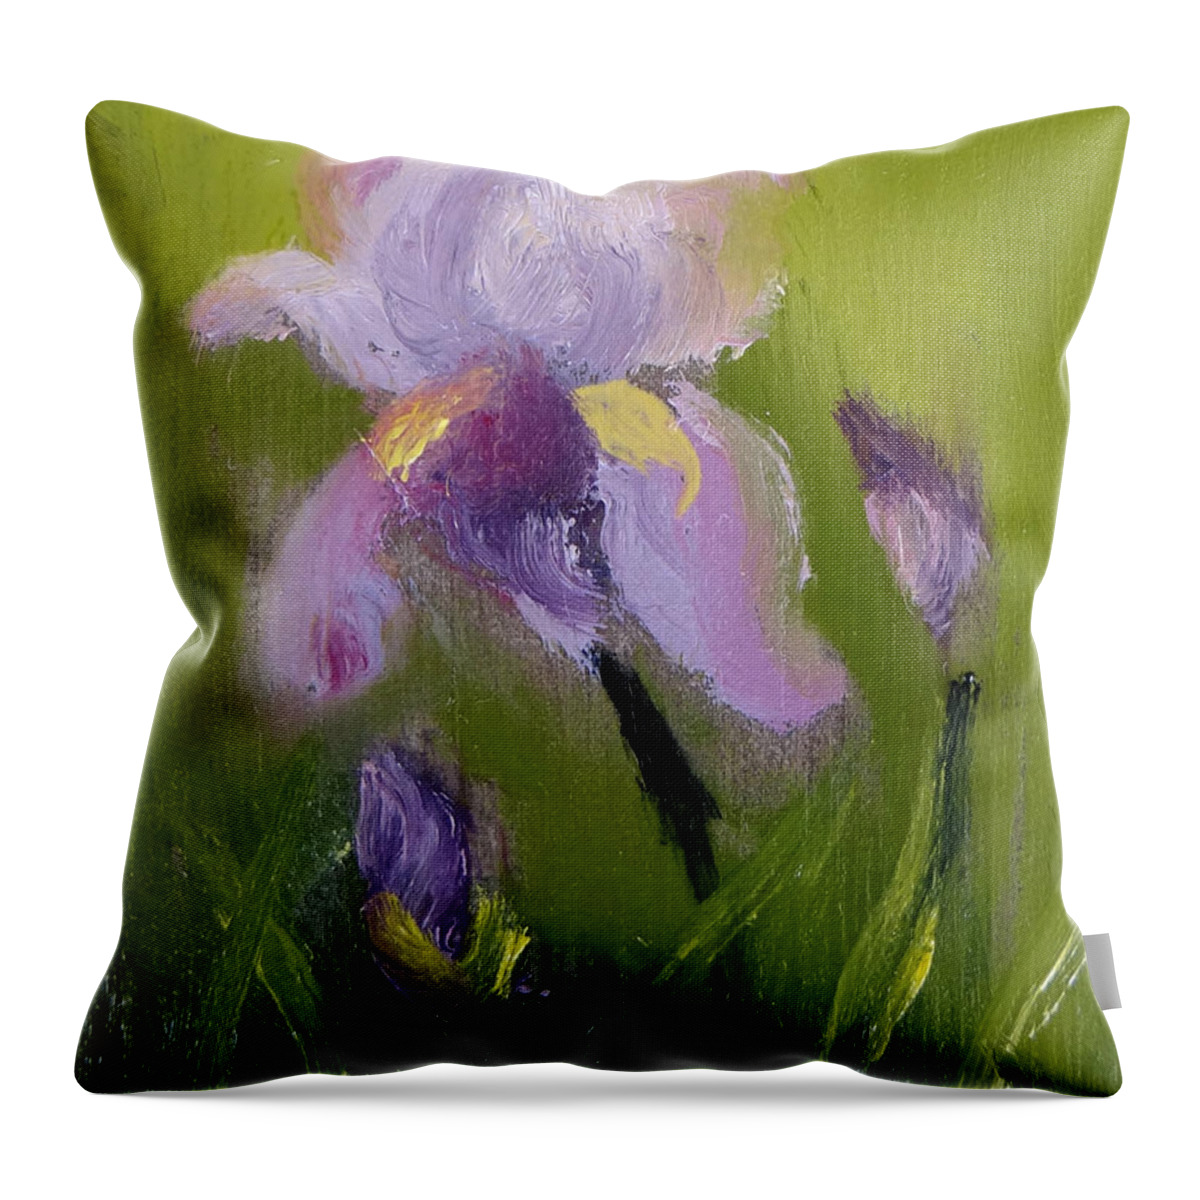 Iris Miniature Throw Pillow featuring the painting Iris Miniature by Carol Berning